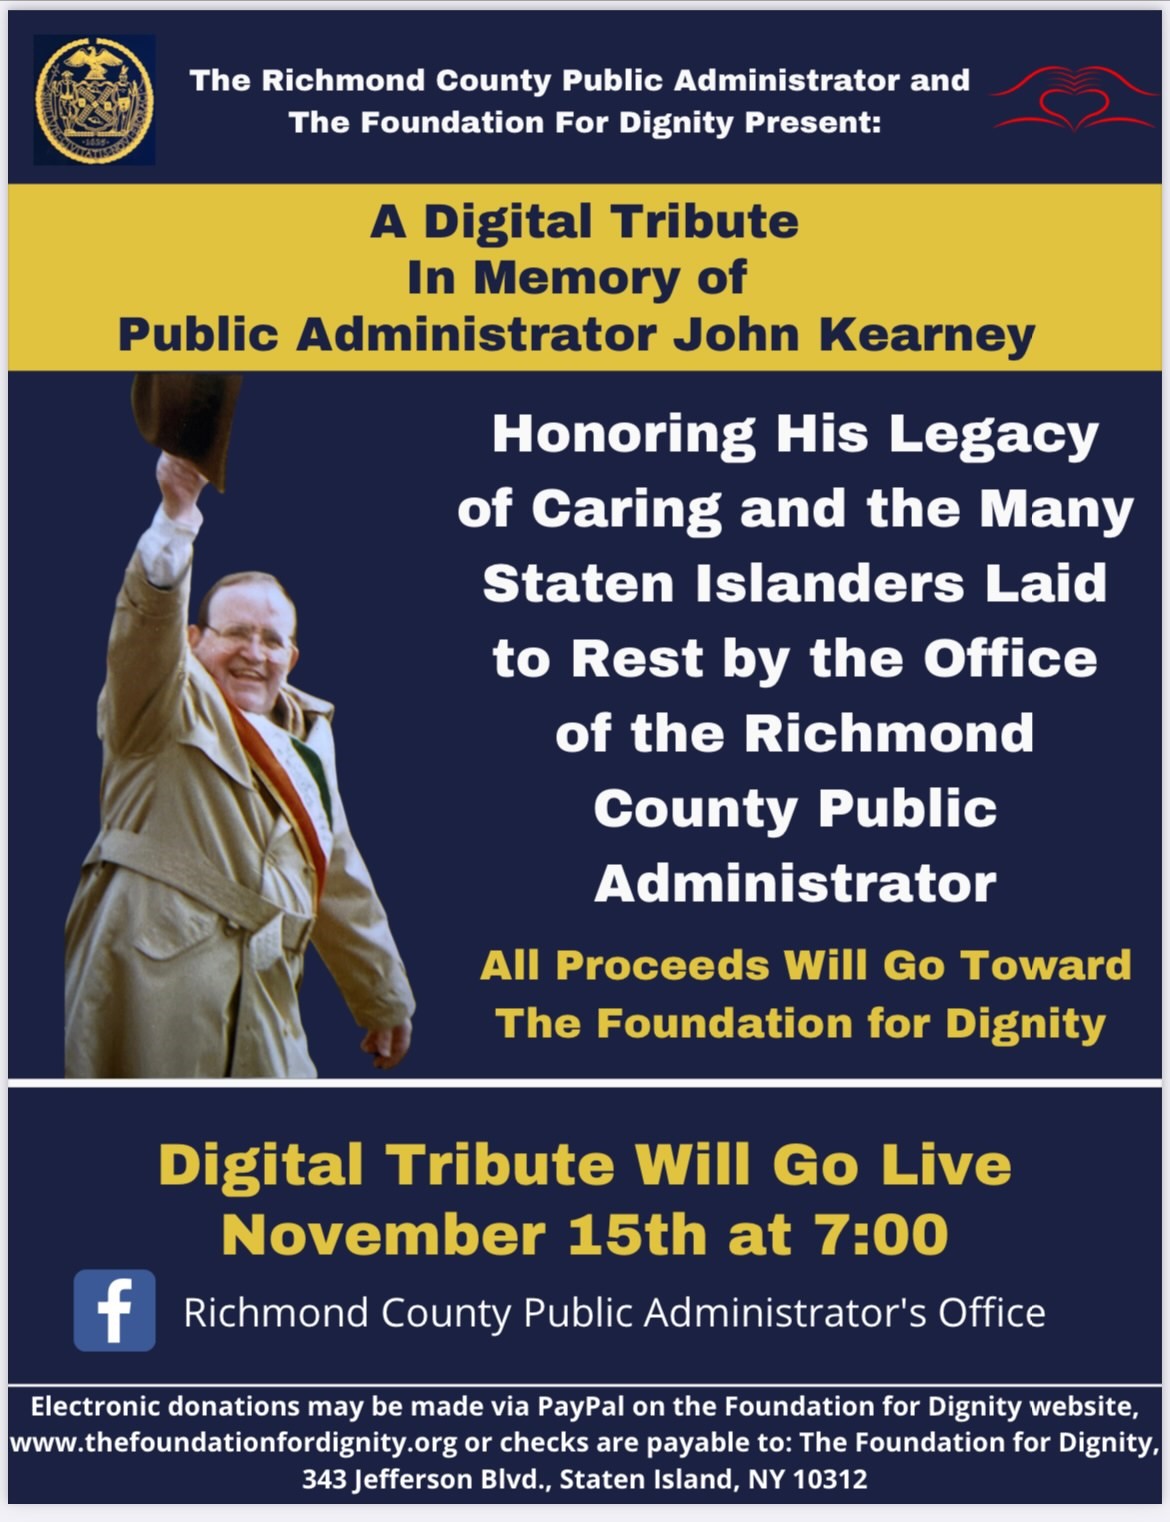 A Digital Tribute In Memory of Public Administrator John Kearney